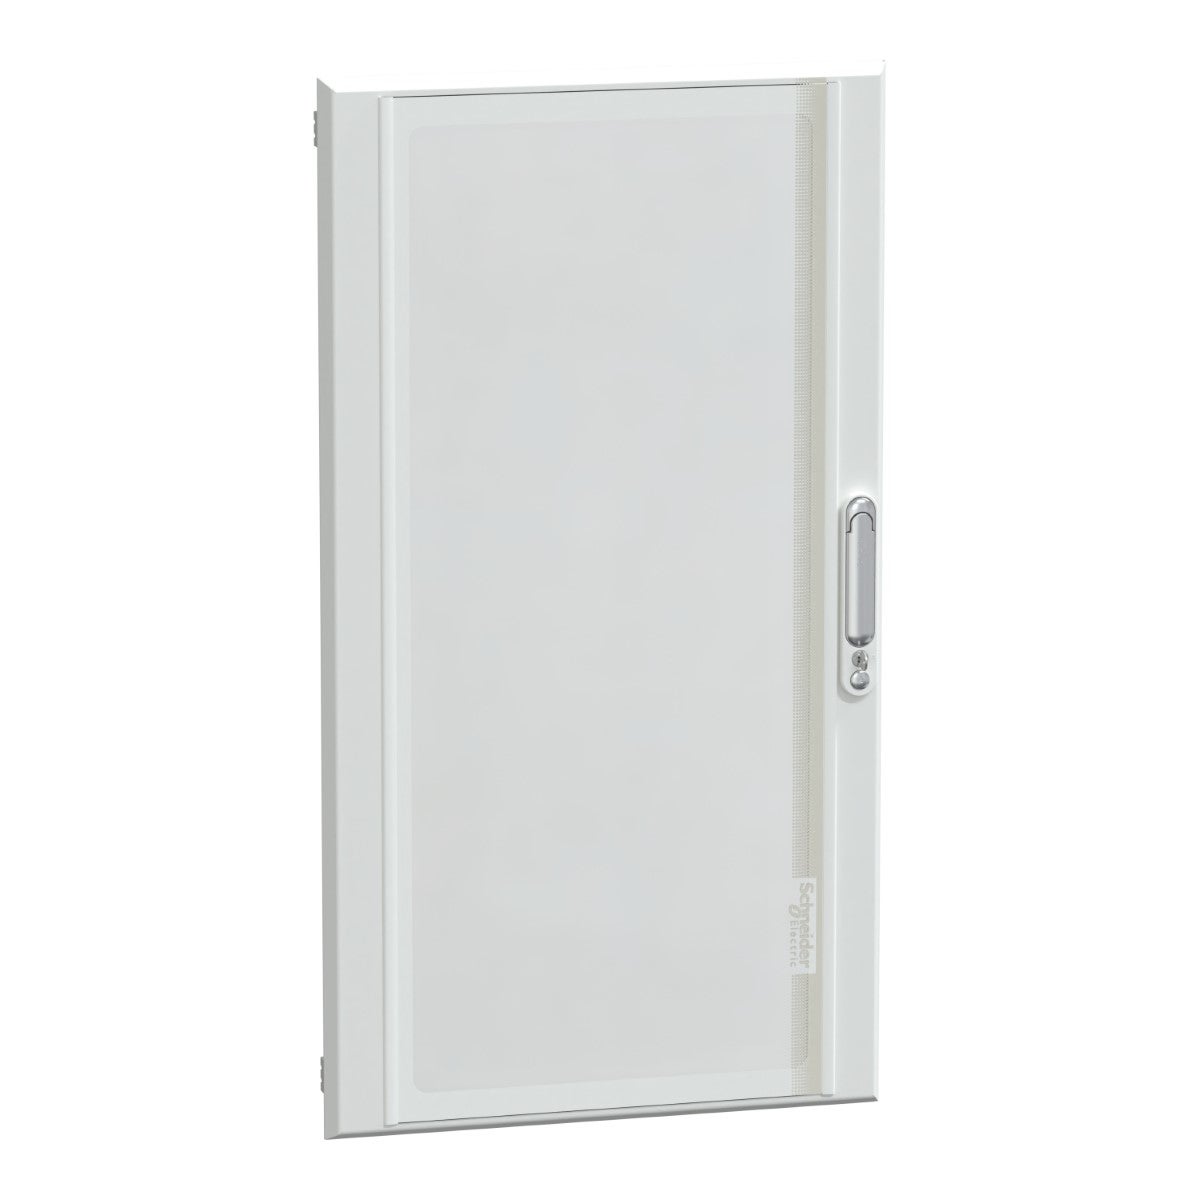 Door, PrismaSeT G, transparent type for enclosure, 21M, W600, IP30, white, RAL 9003